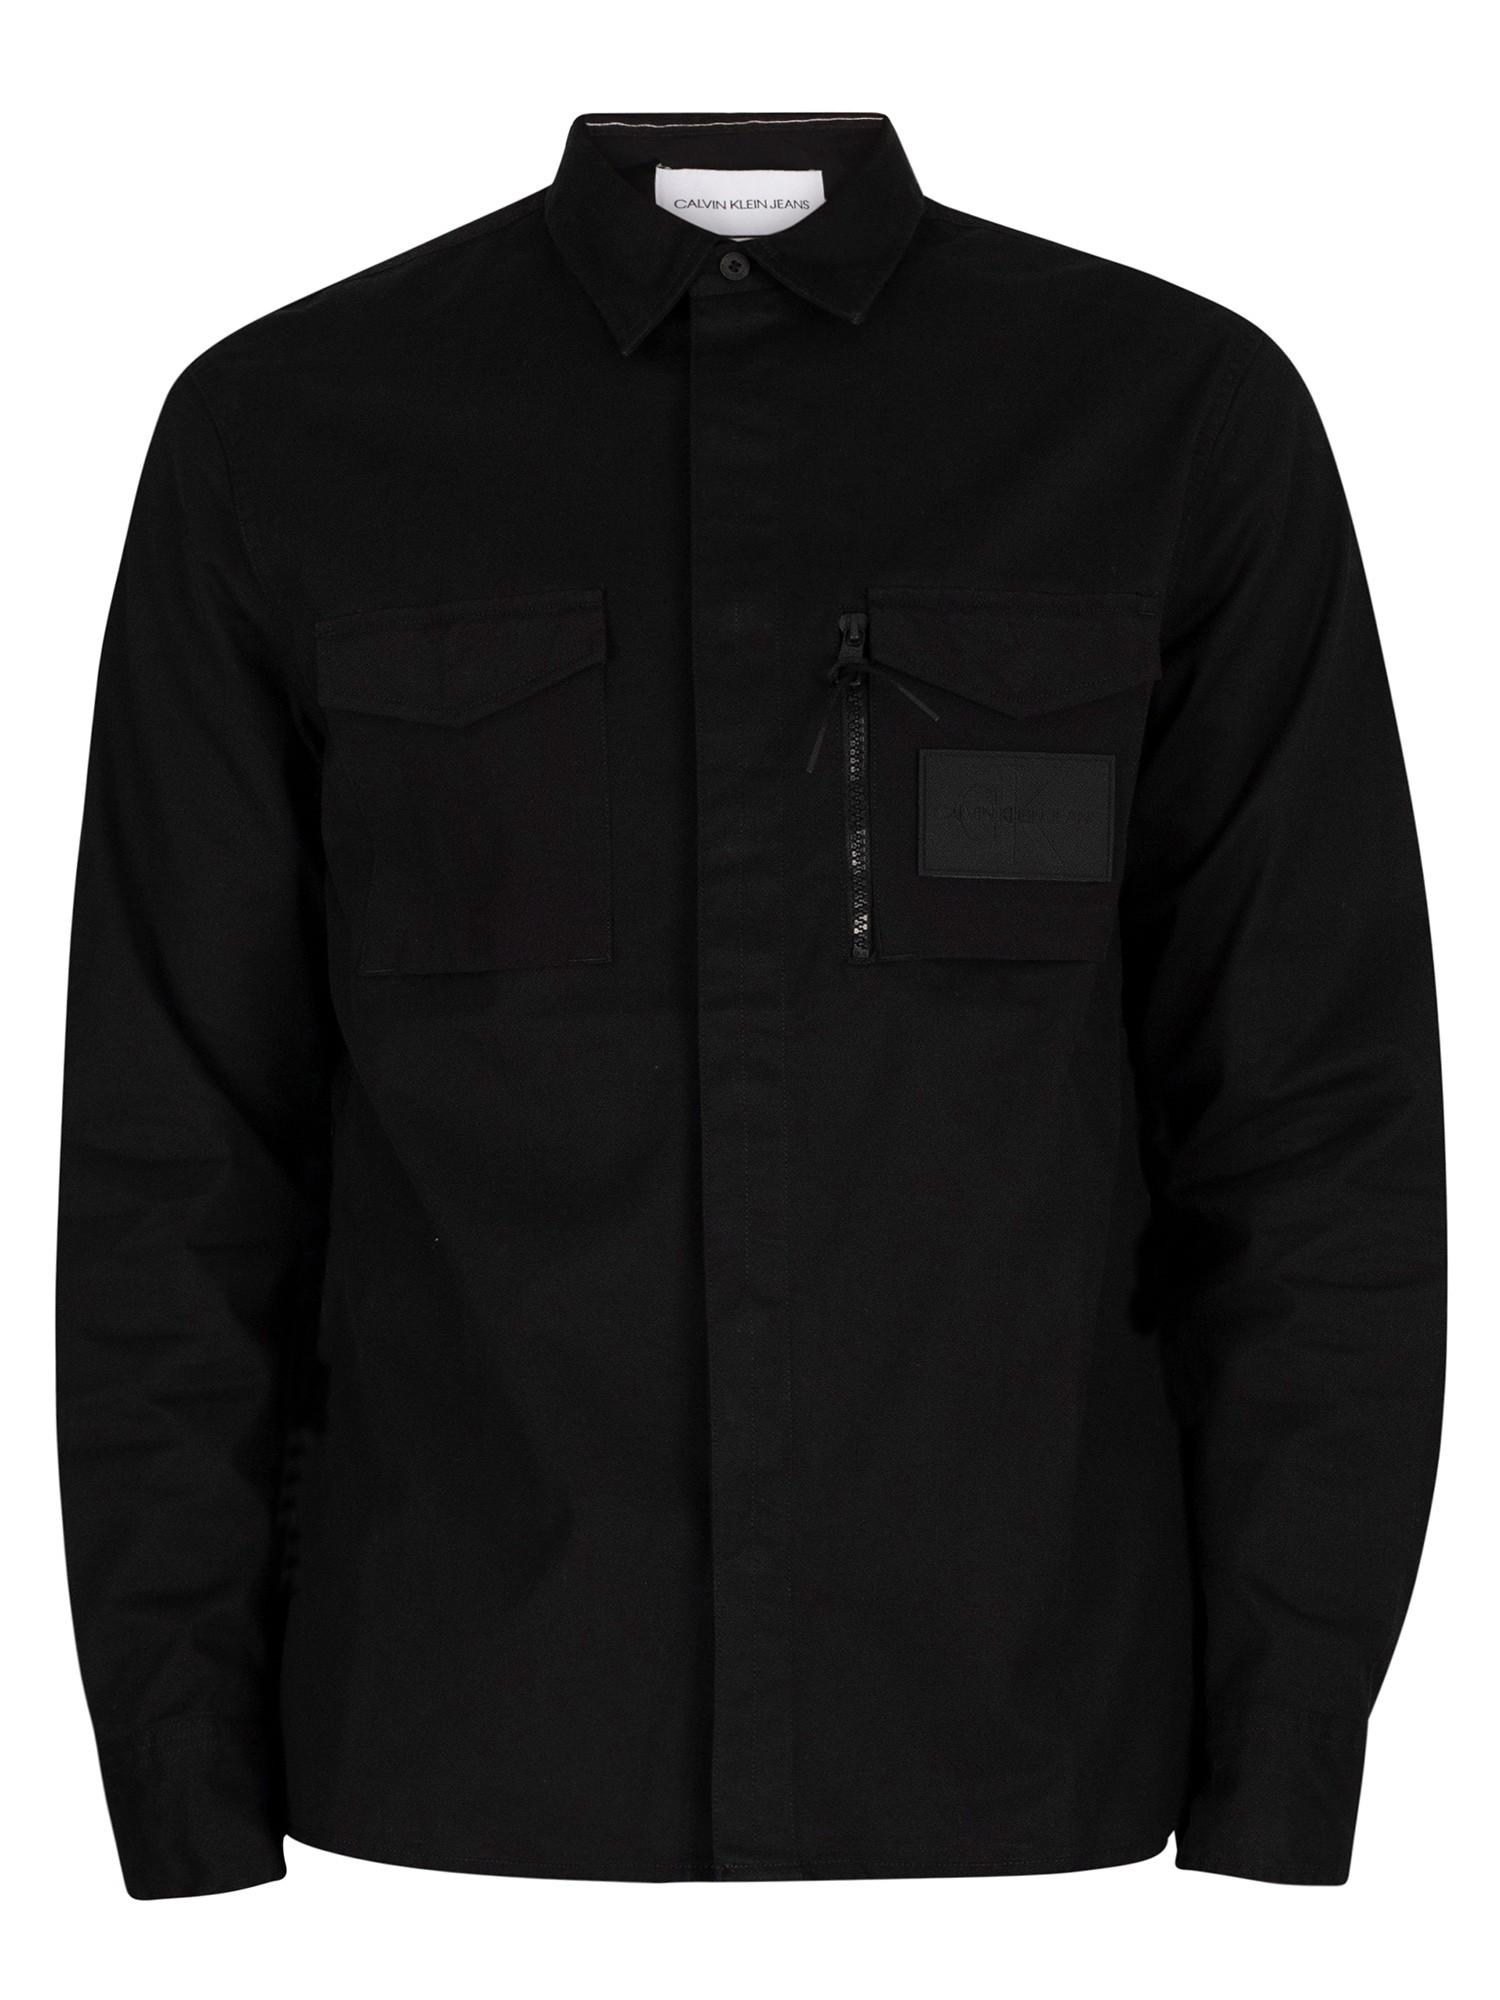 Calvin Klein Denim Minimal Utility Overshirt in Black for Men - Lyst